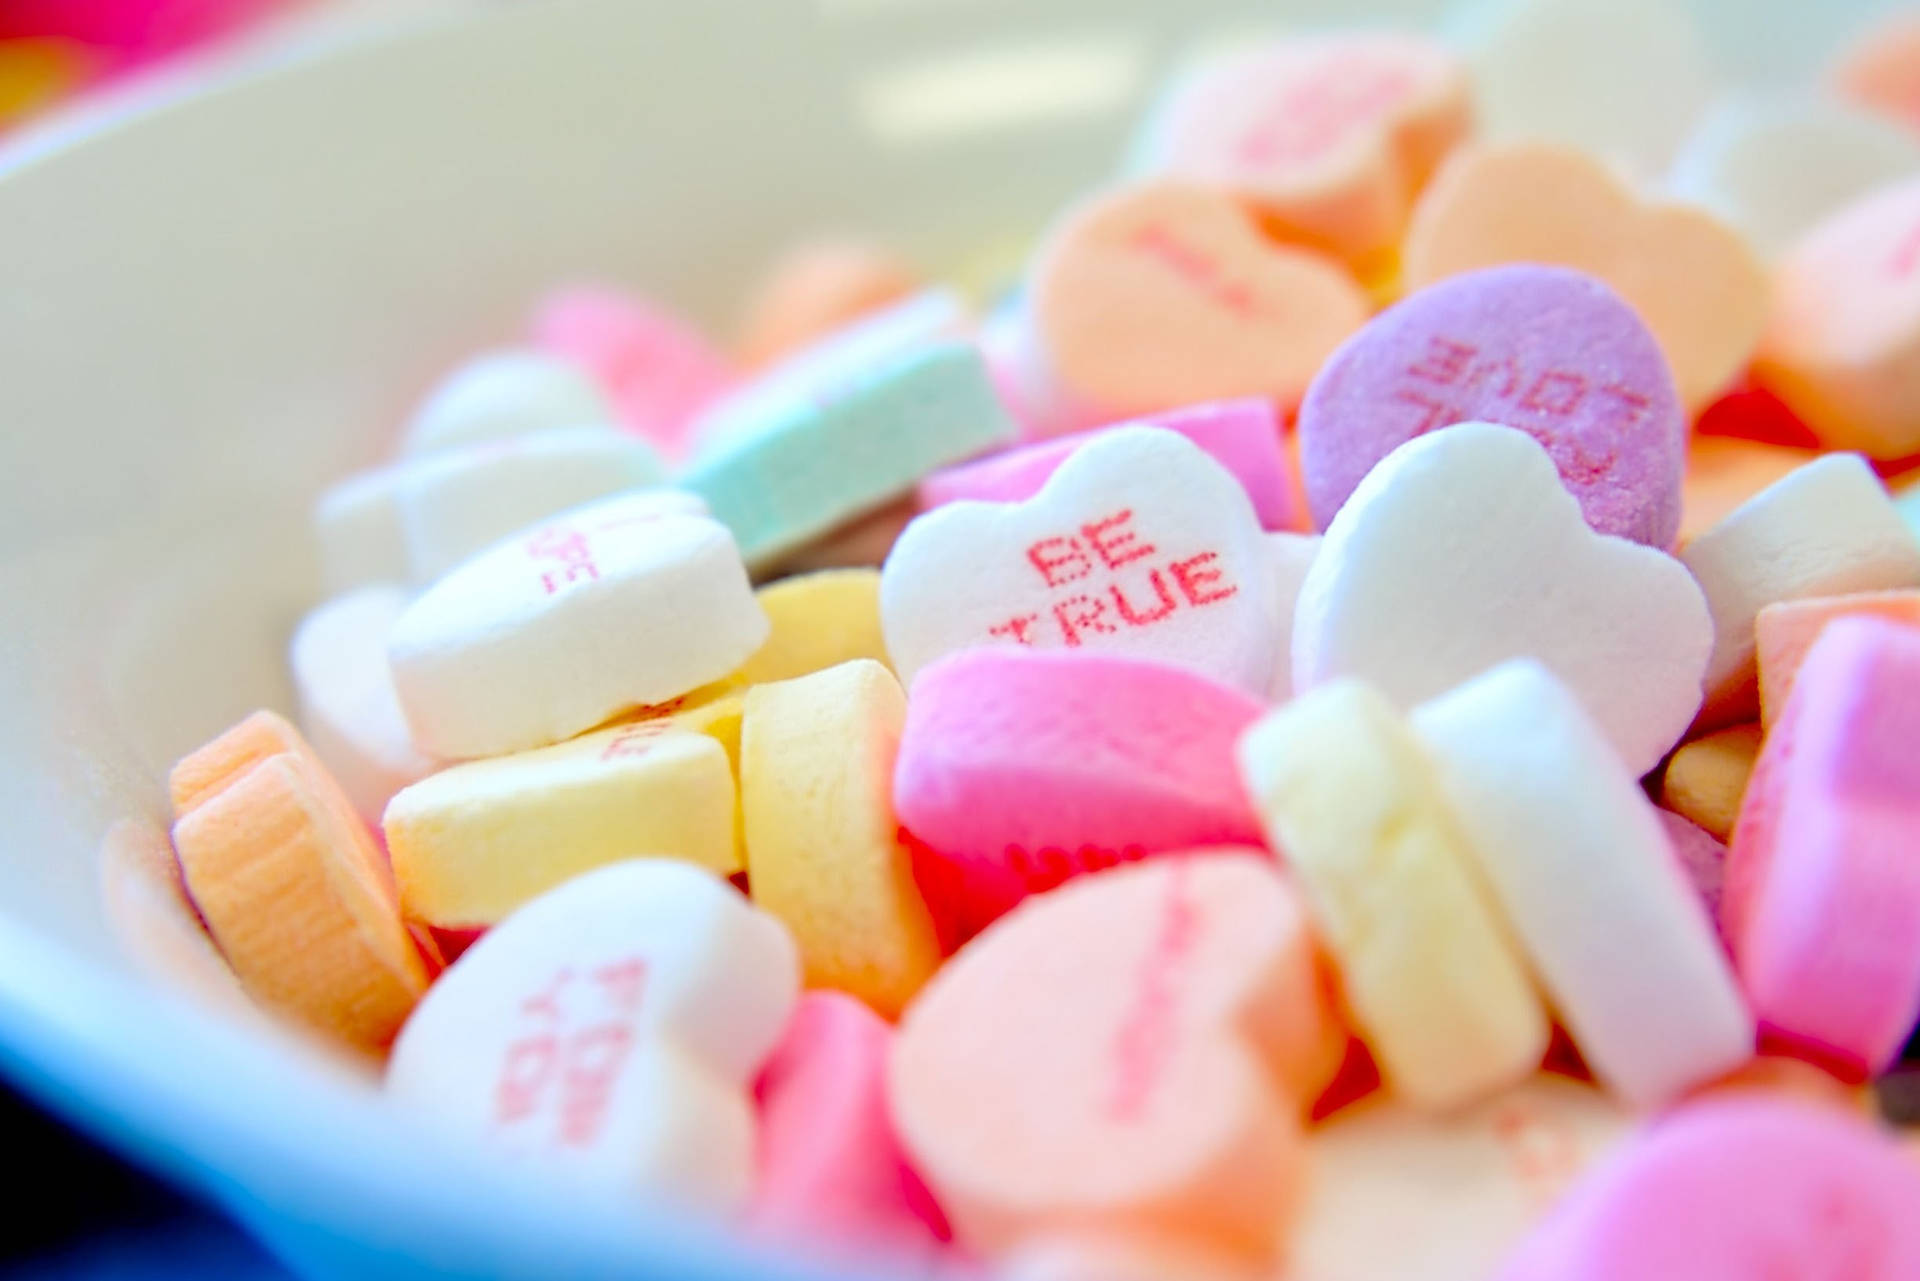 February Sweet Candy Treats Background